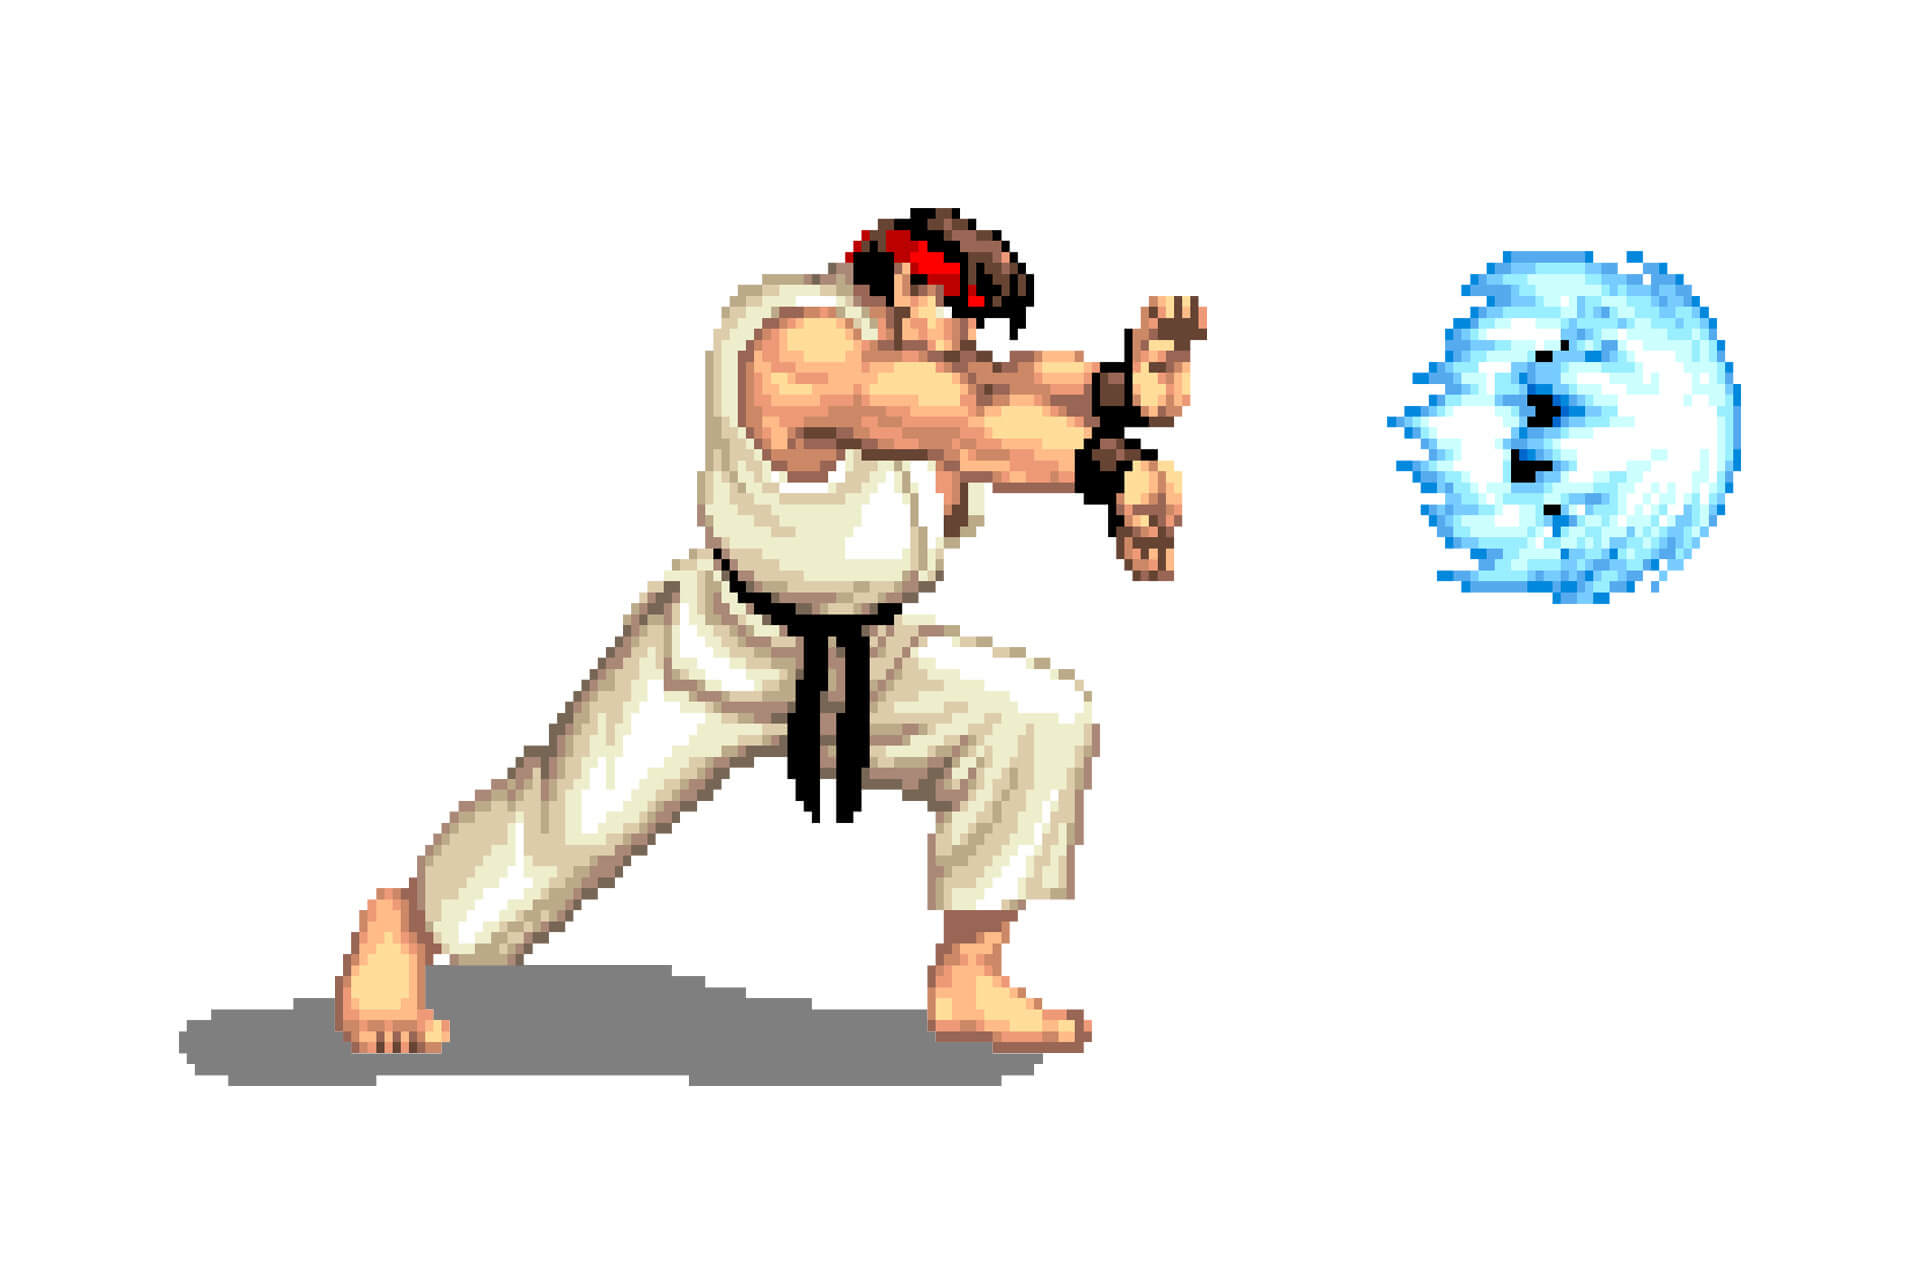 Momento epico do Ryu preparando um HADOUKEN no Street fighter II Victo